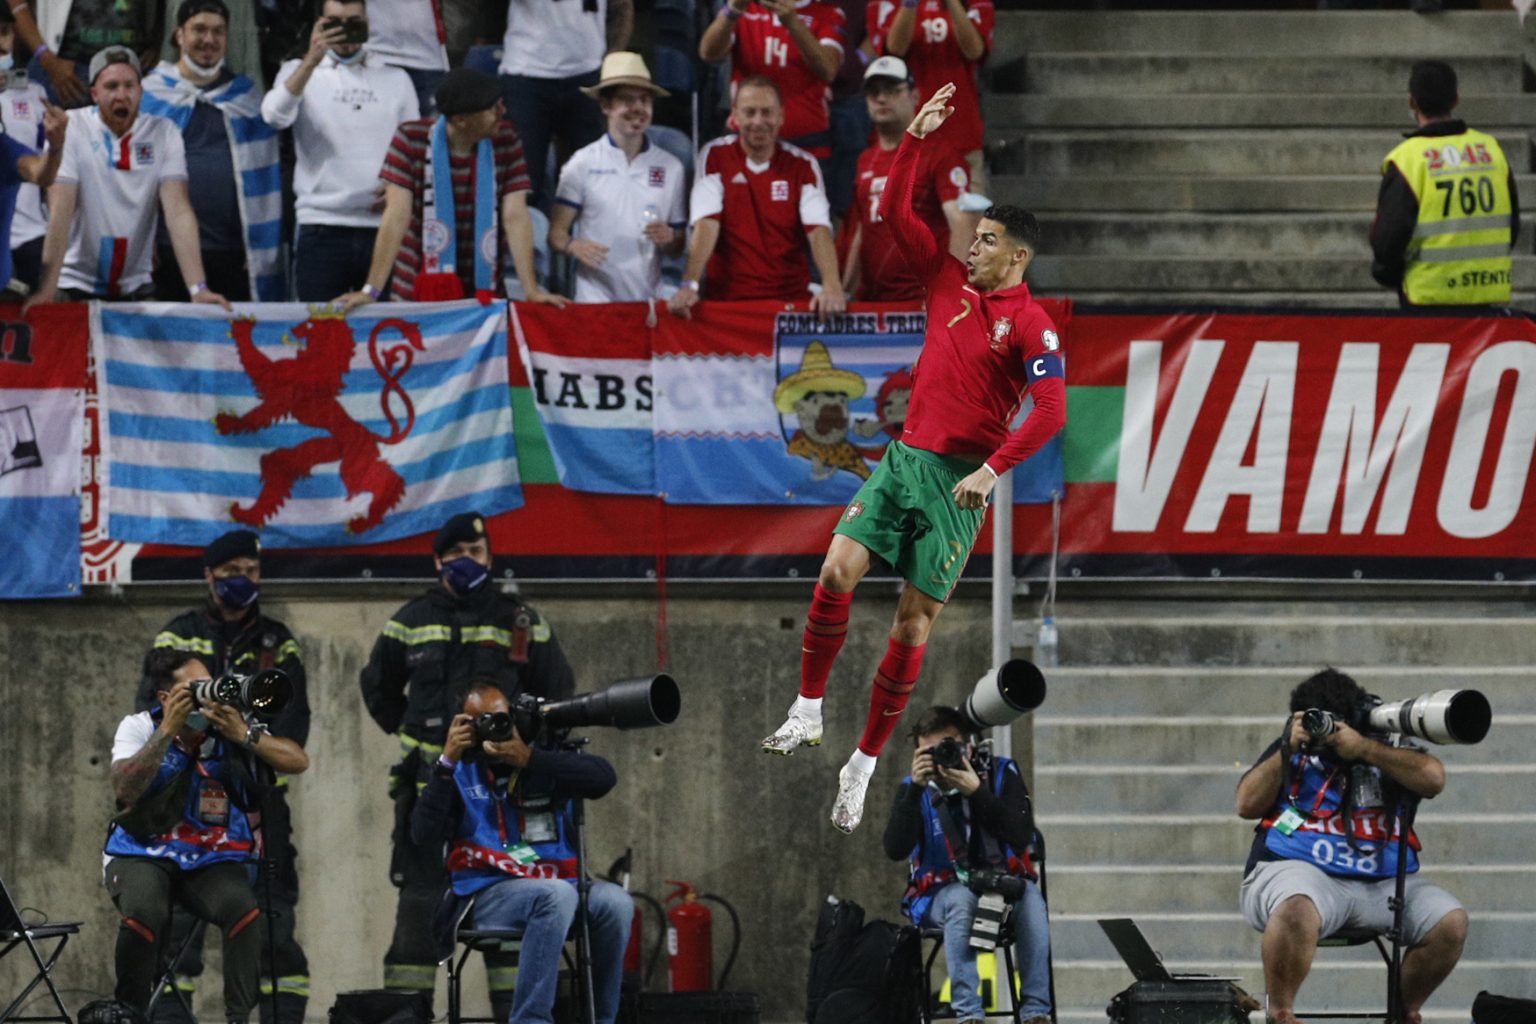 Portugal vs Luxembourg